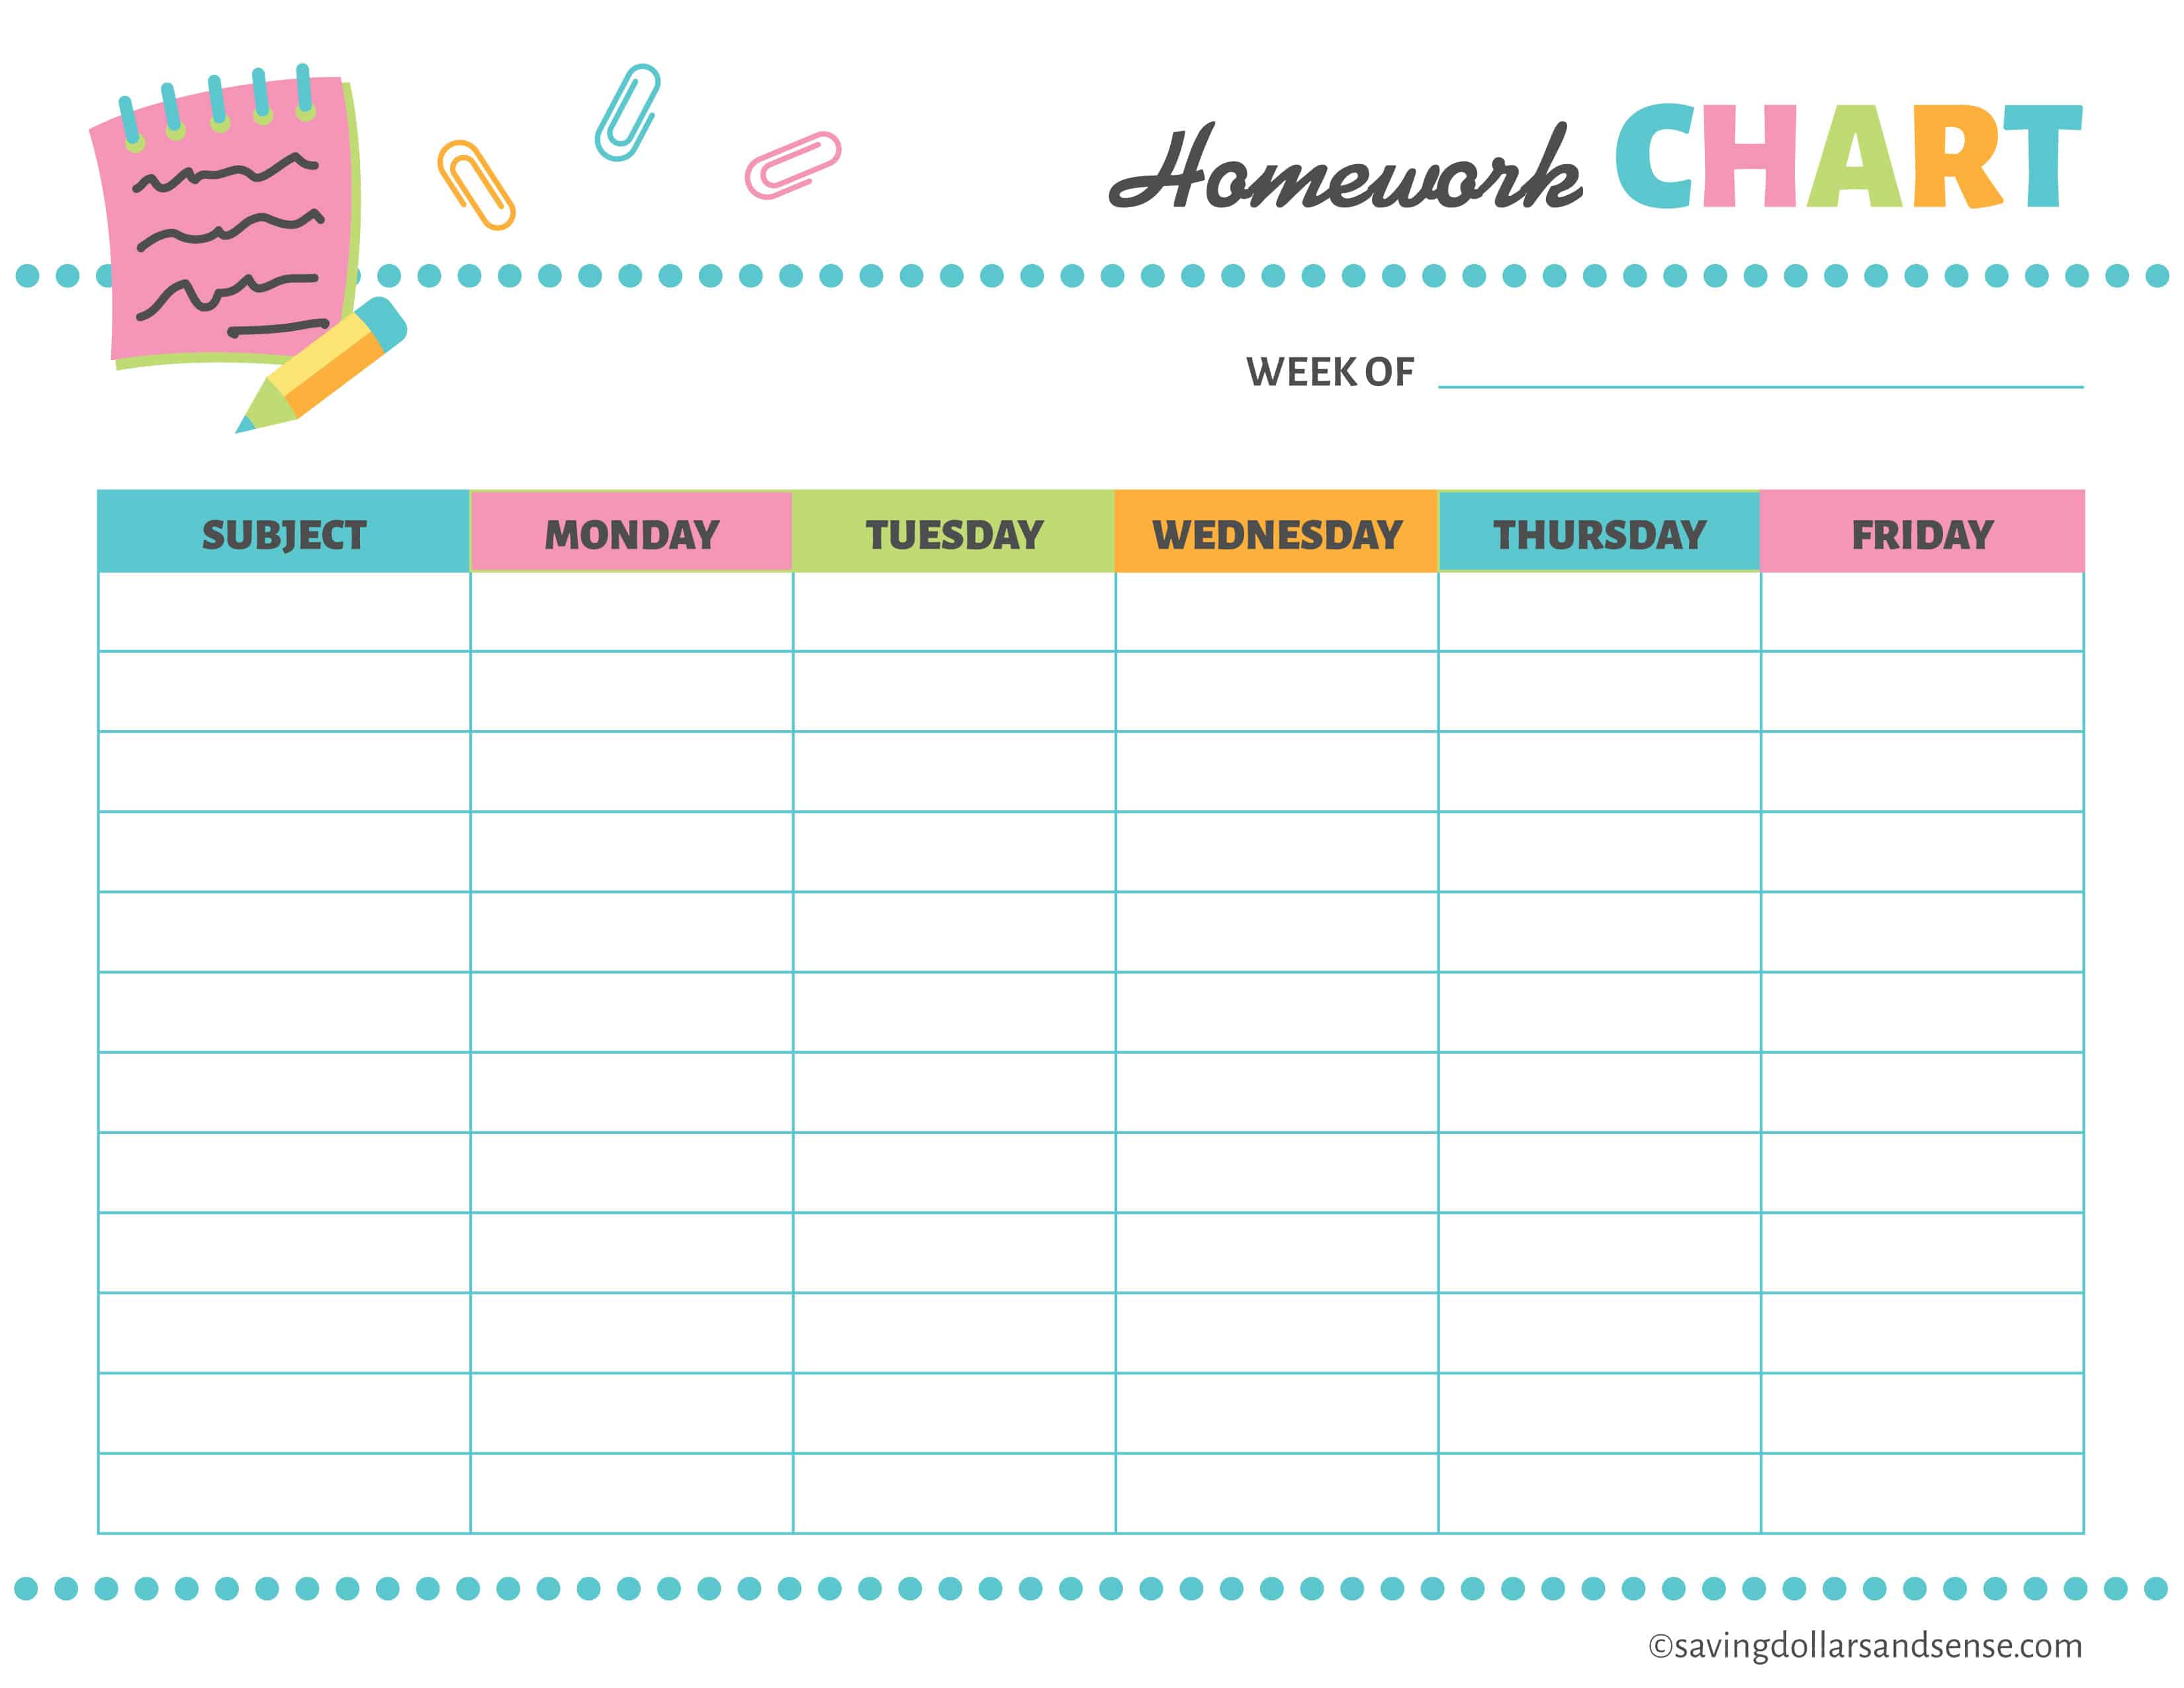 Homework chart from the Printable School Planning Kit